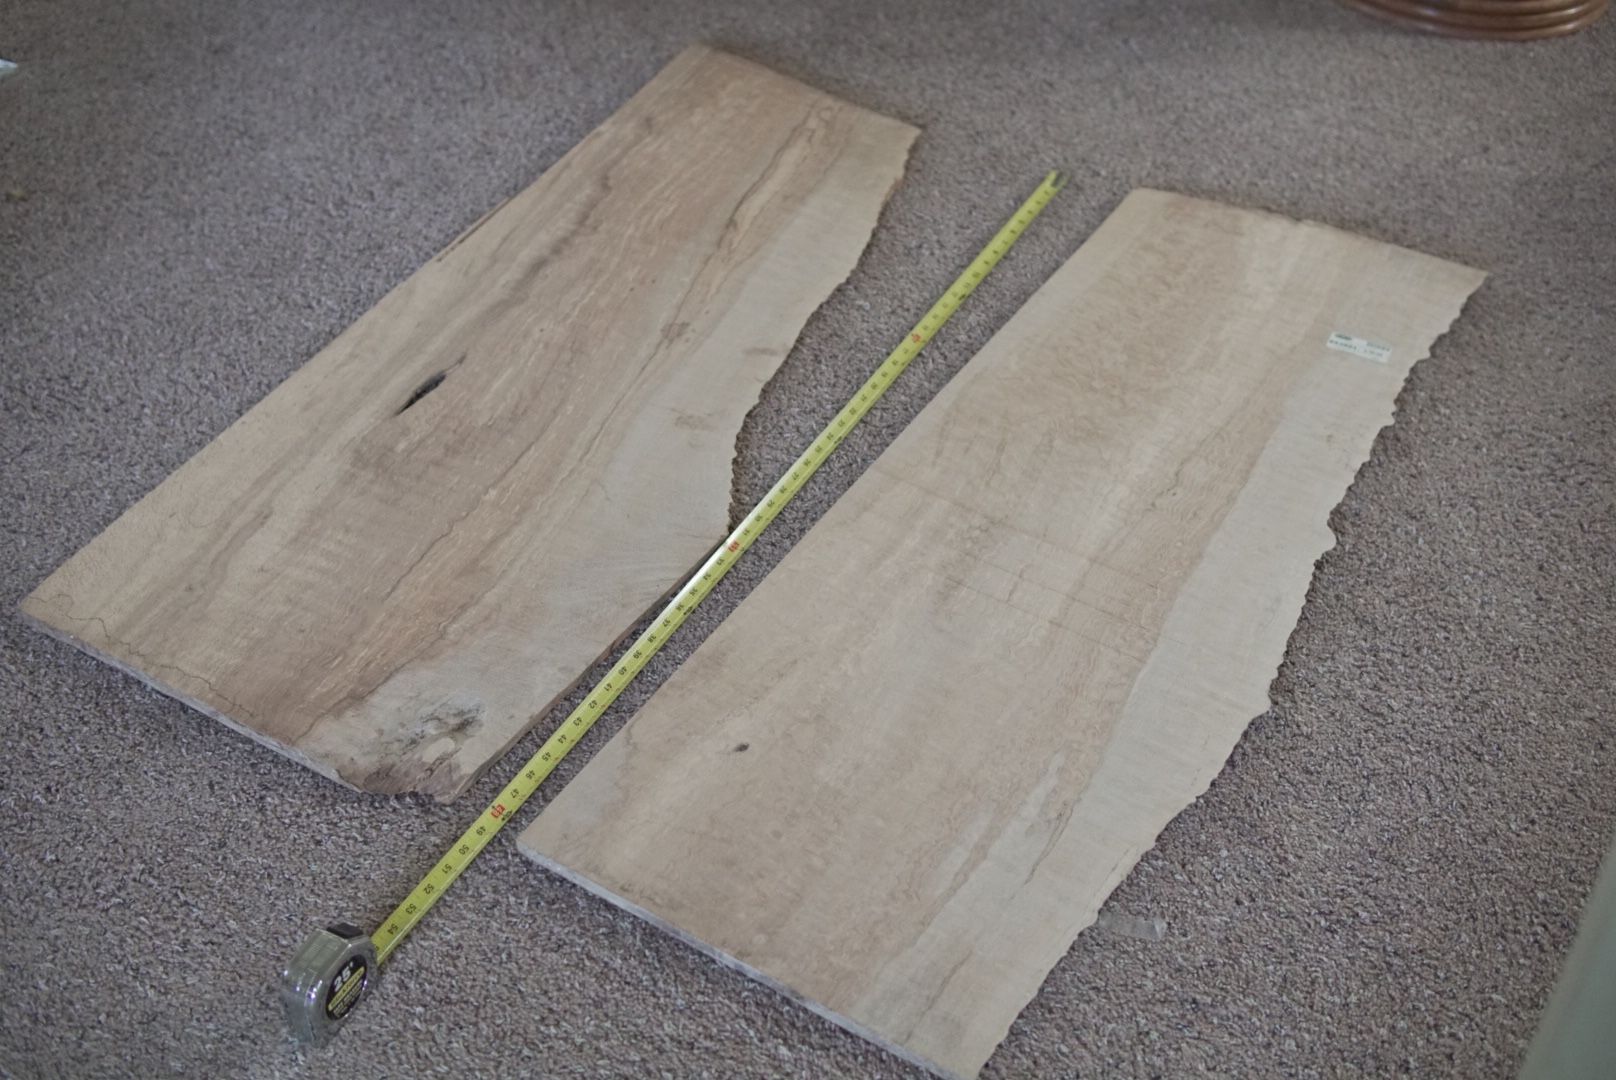 Live edge maple wood slabs - 2 for $100 kiln dried + figured